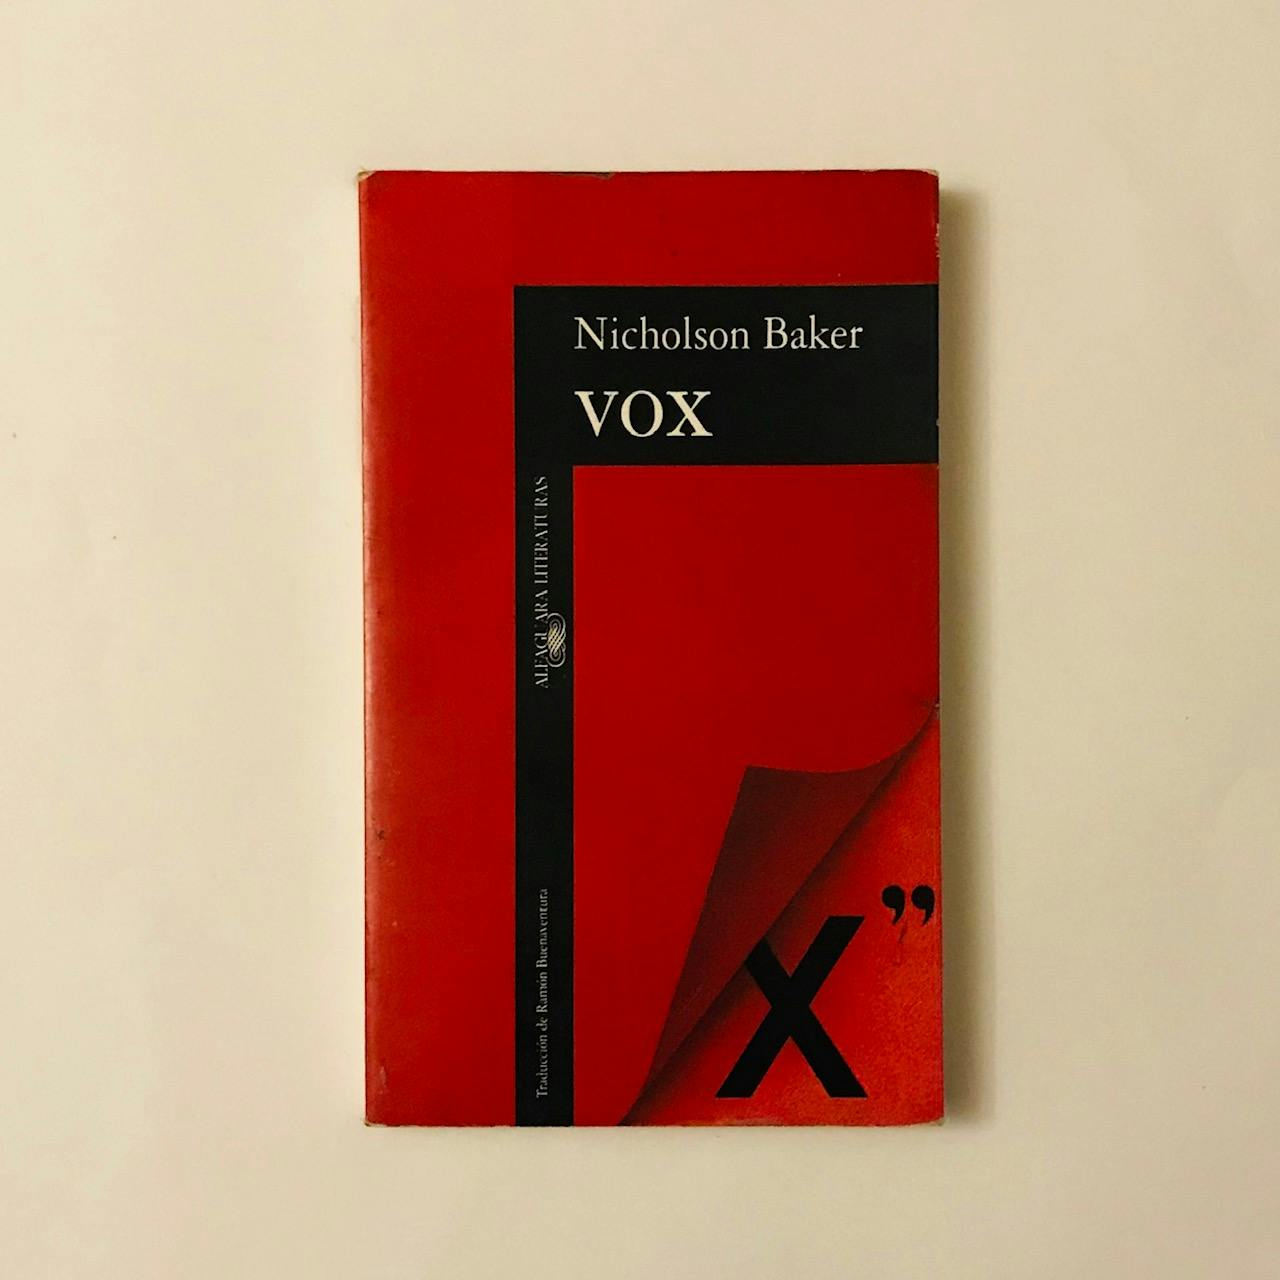 "VOX", de Nicholson Baker